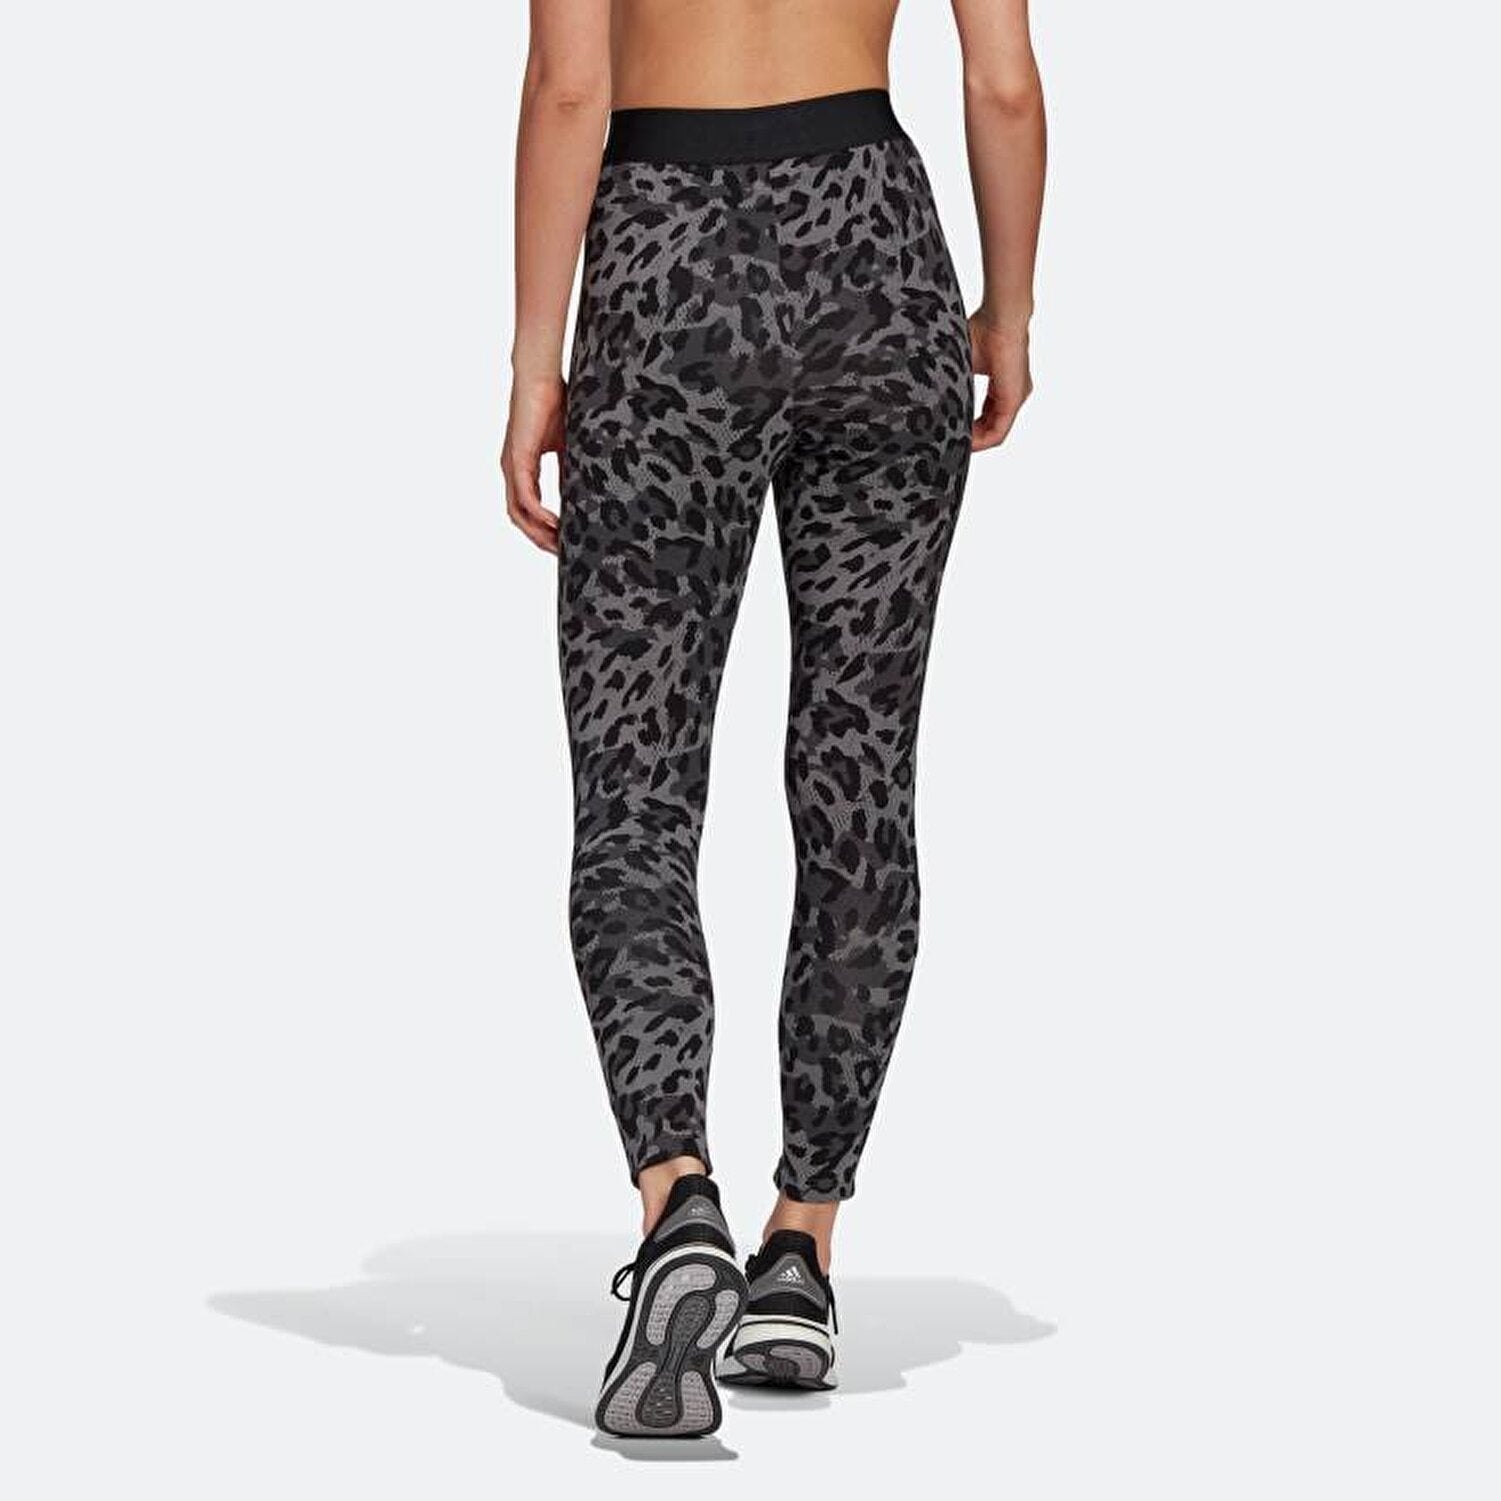 Adidas Leopard print leggings